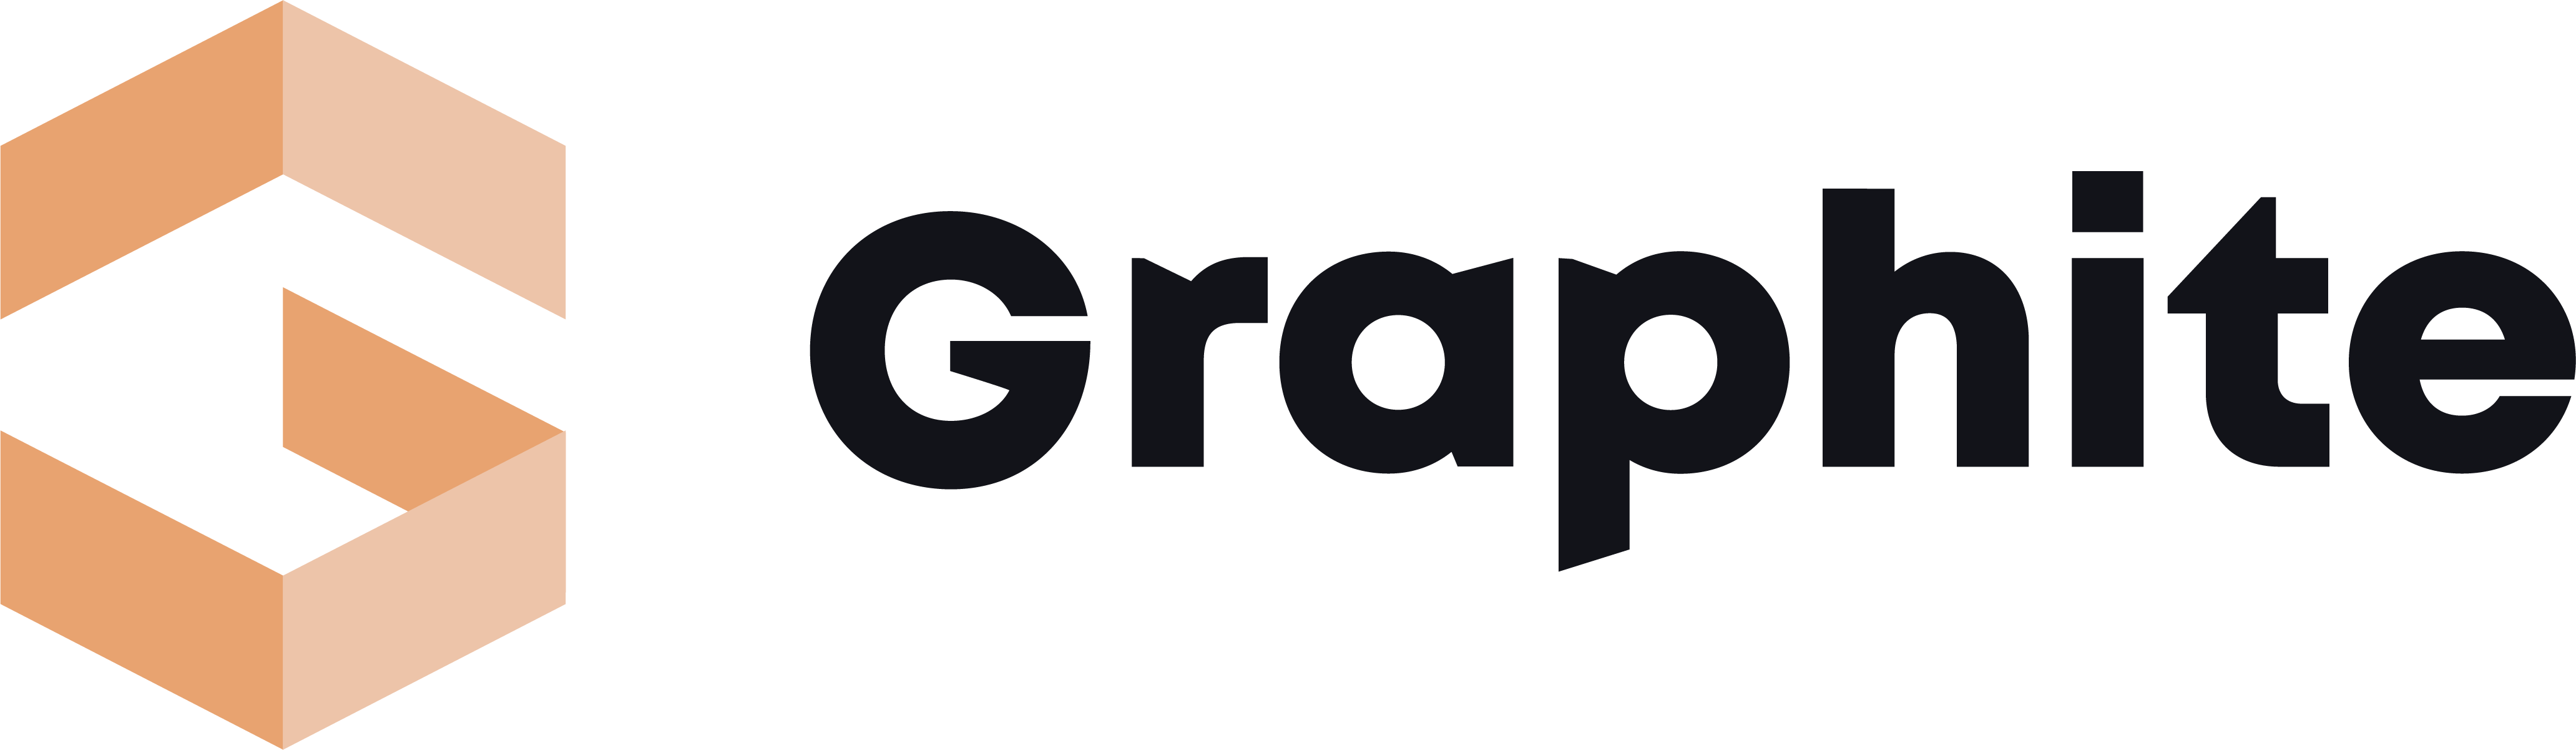 Graphite logo Primary